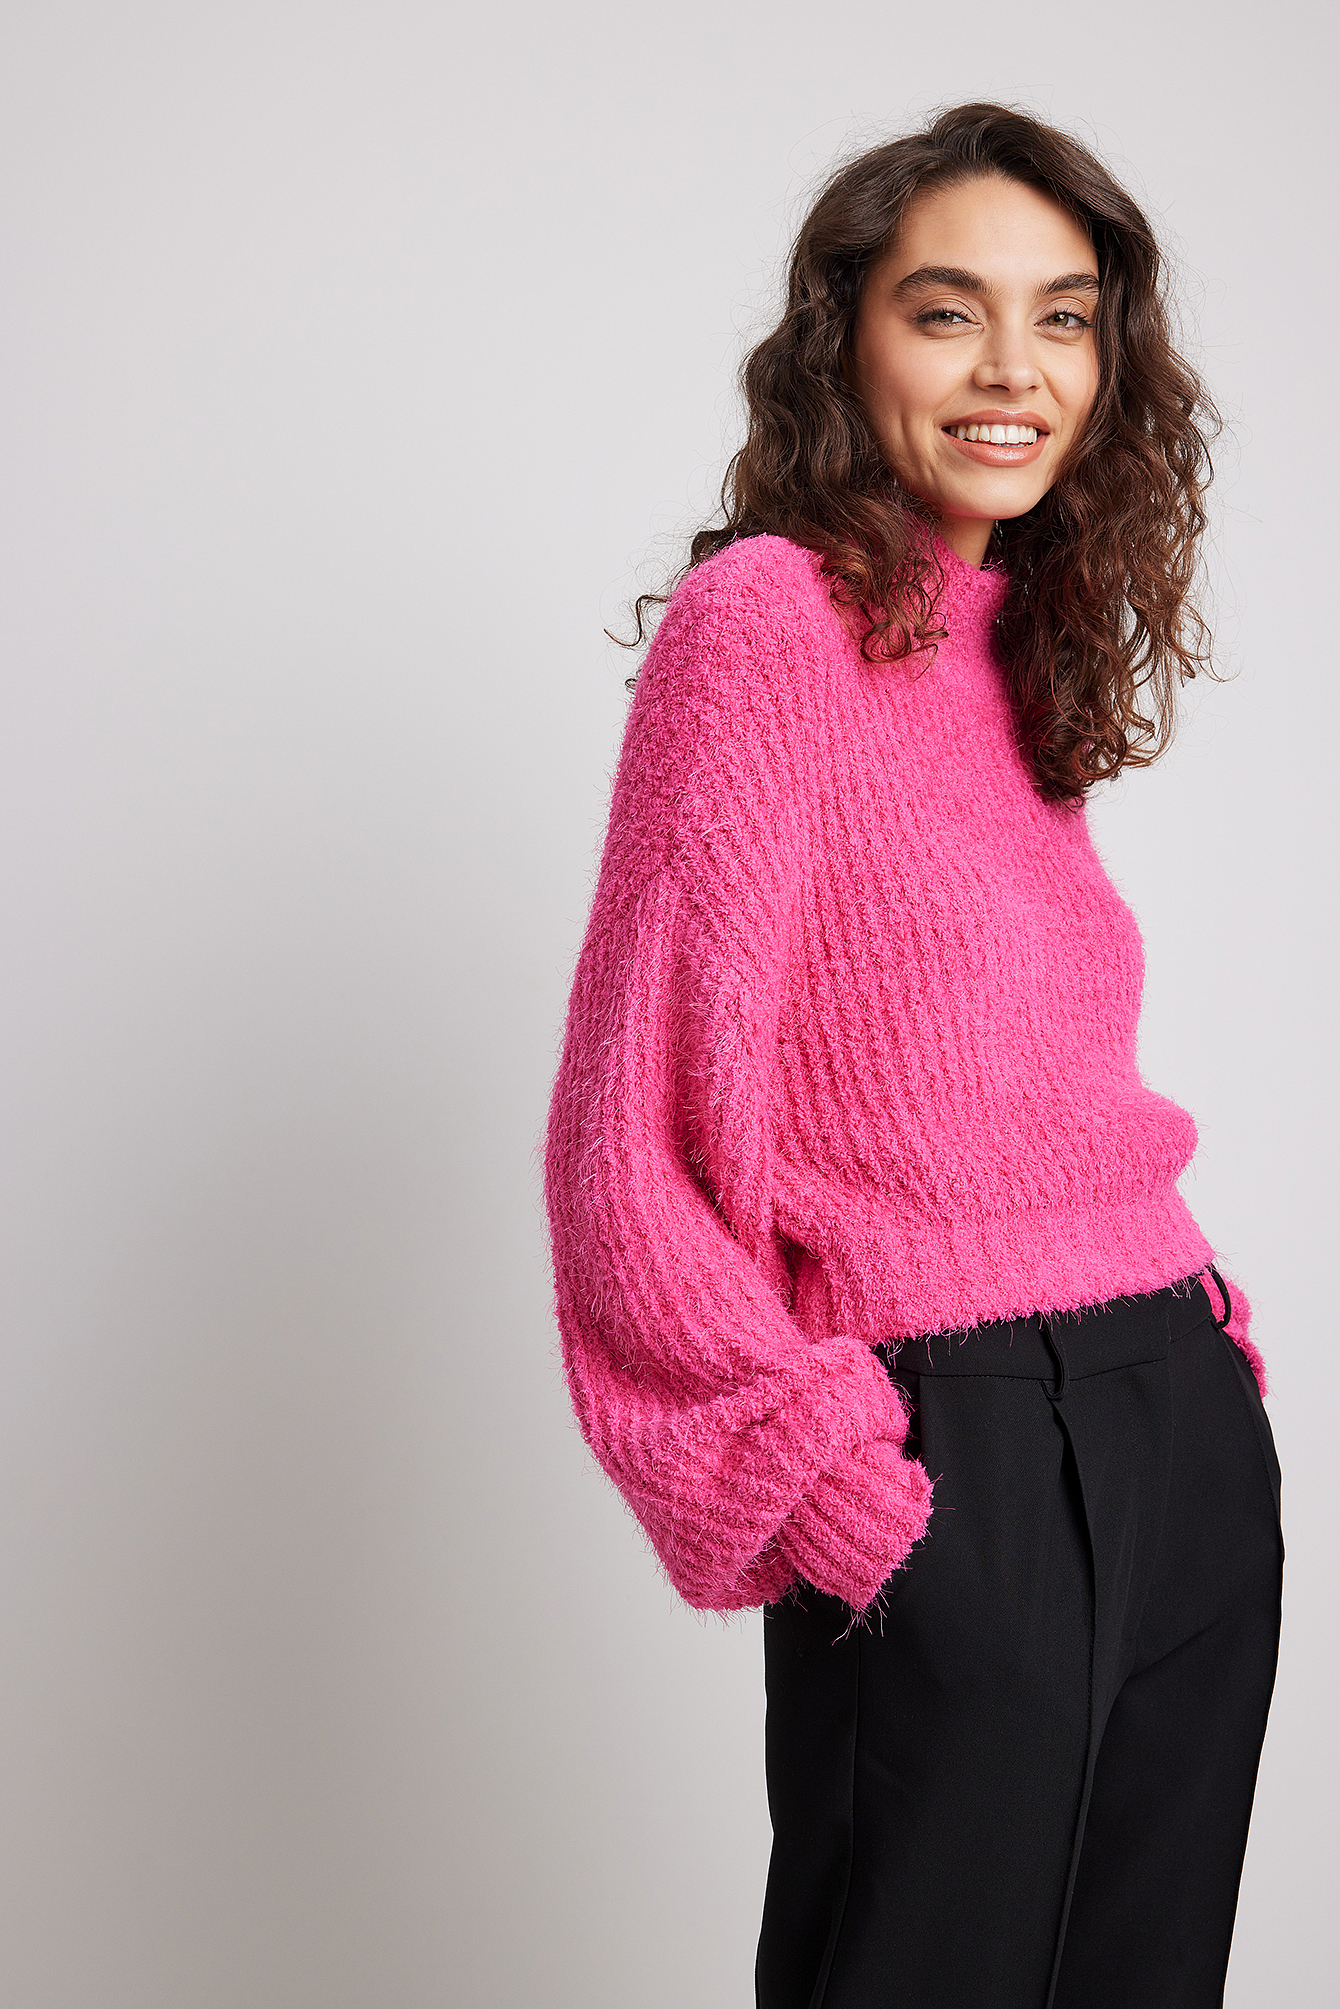 Ean 13 Turtleneck in Pastel Pink Pink Womens Clothing Jumpers and knitwear Turtlenecks 